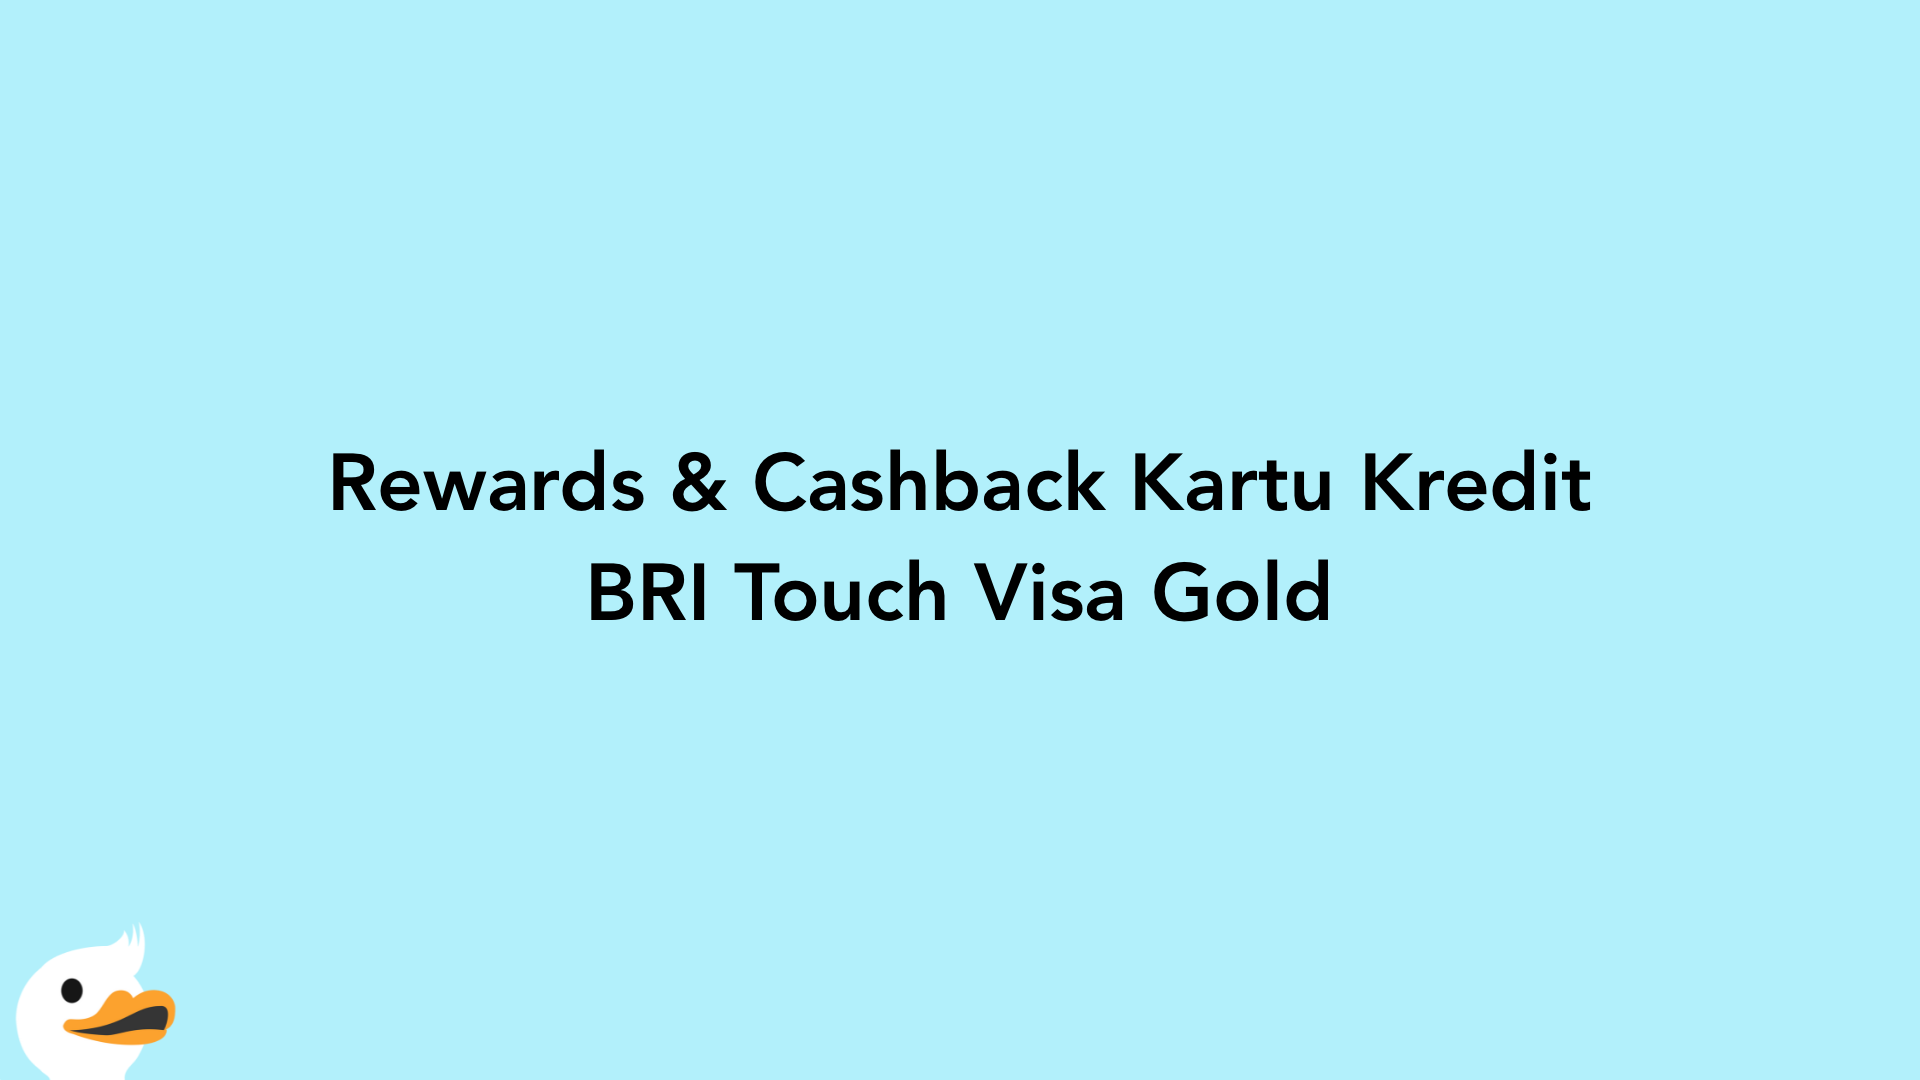 Rewards & Cashback Kartu Kredit BRI Touch Visa Gold